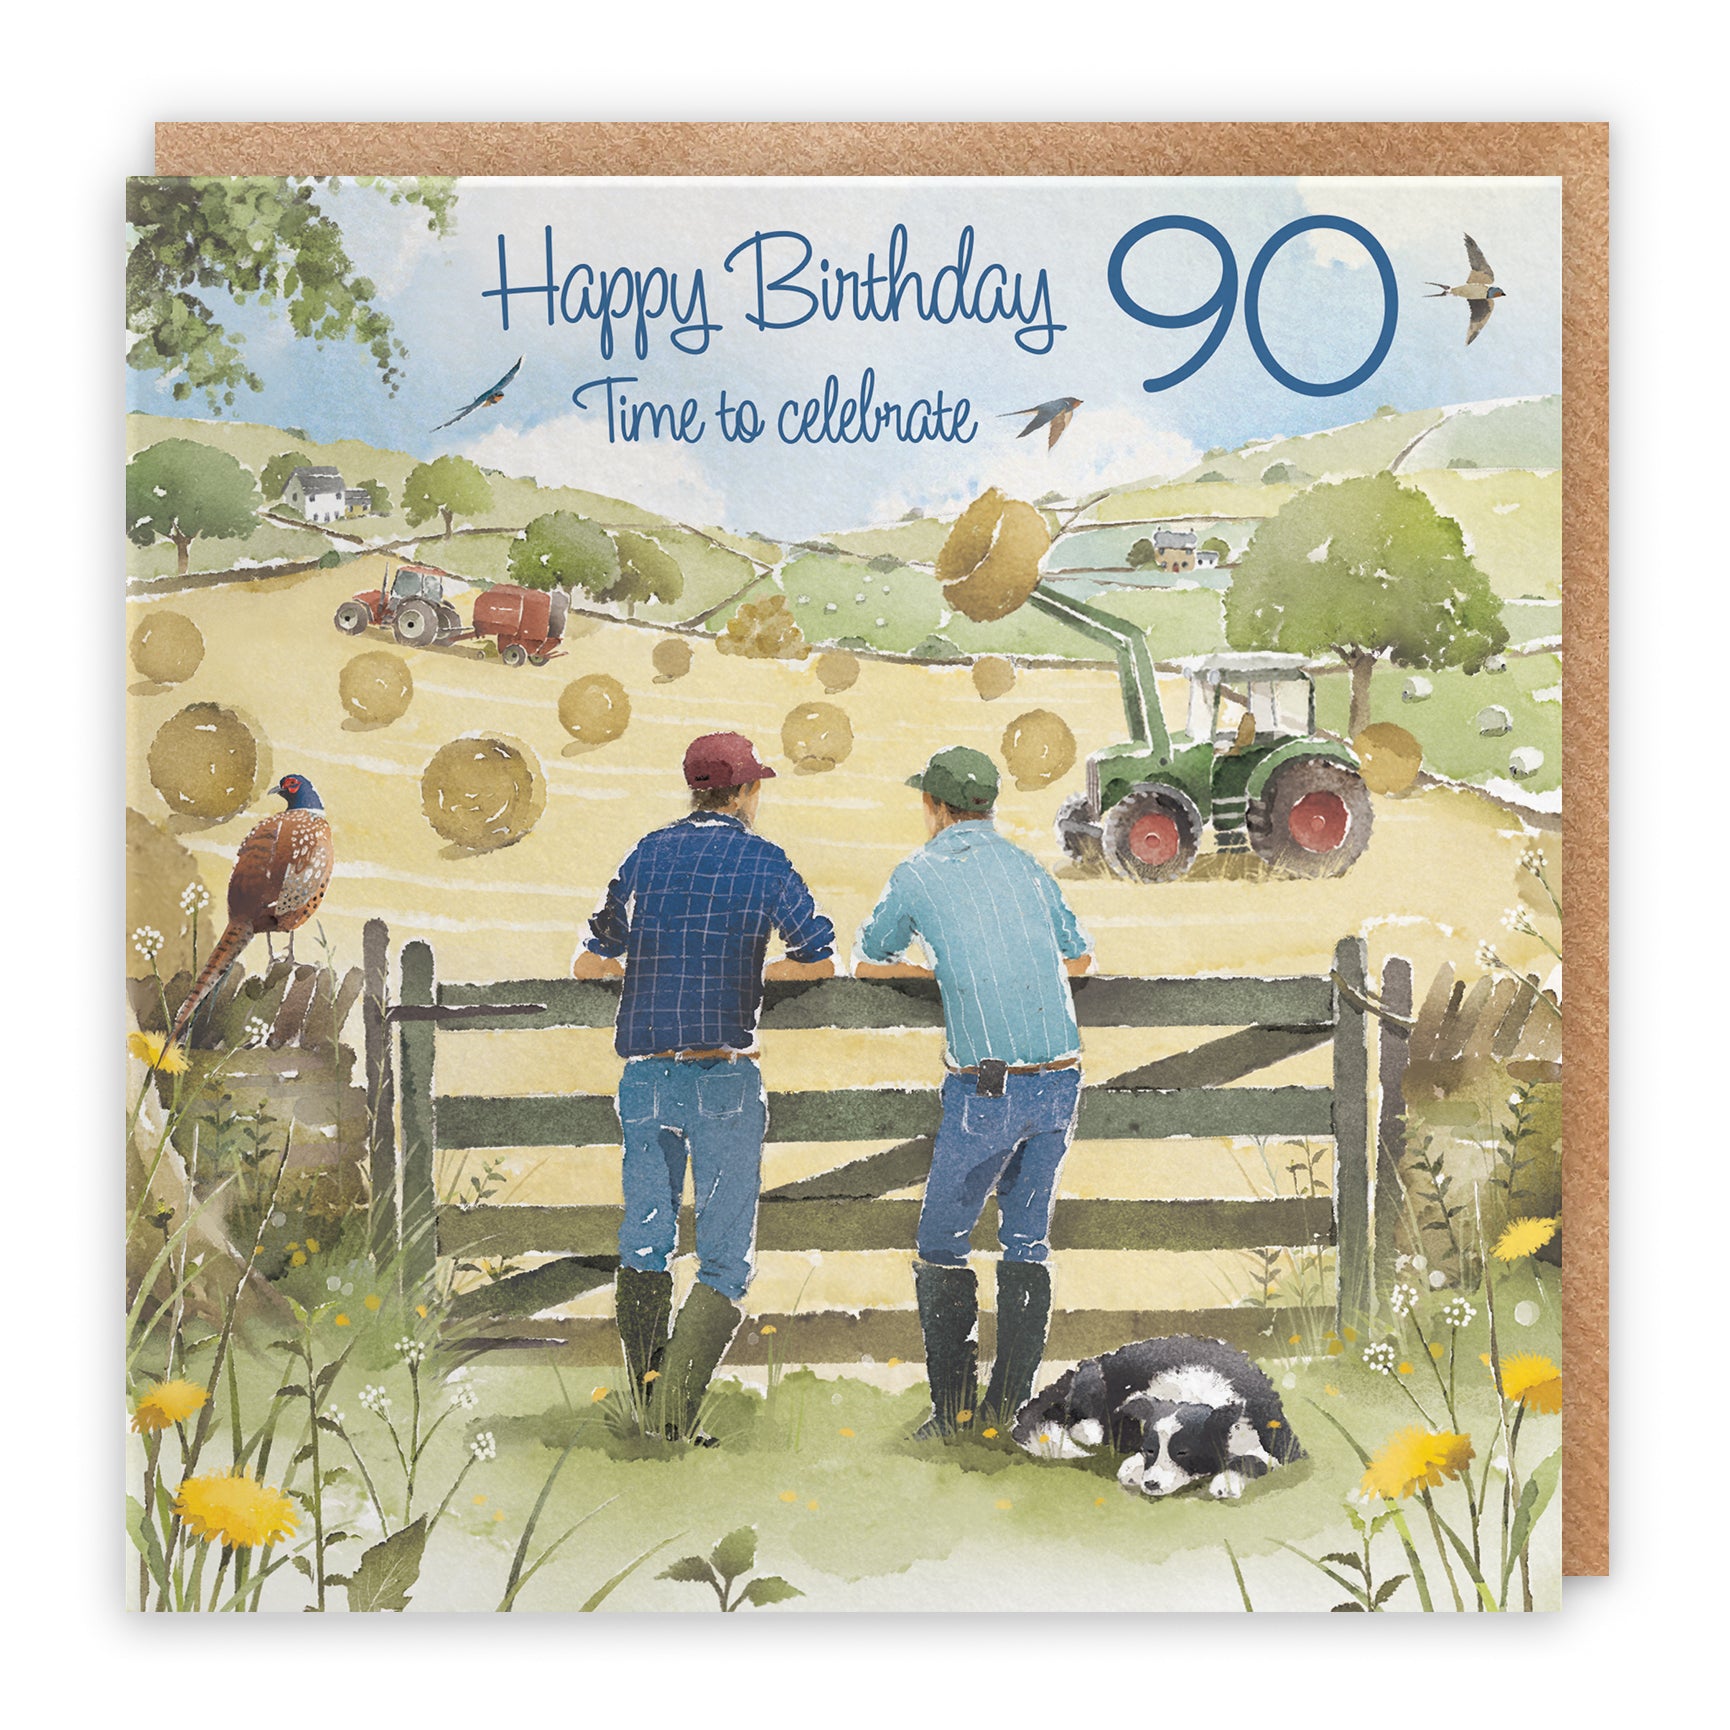 90th Birthday Cards - Age 90